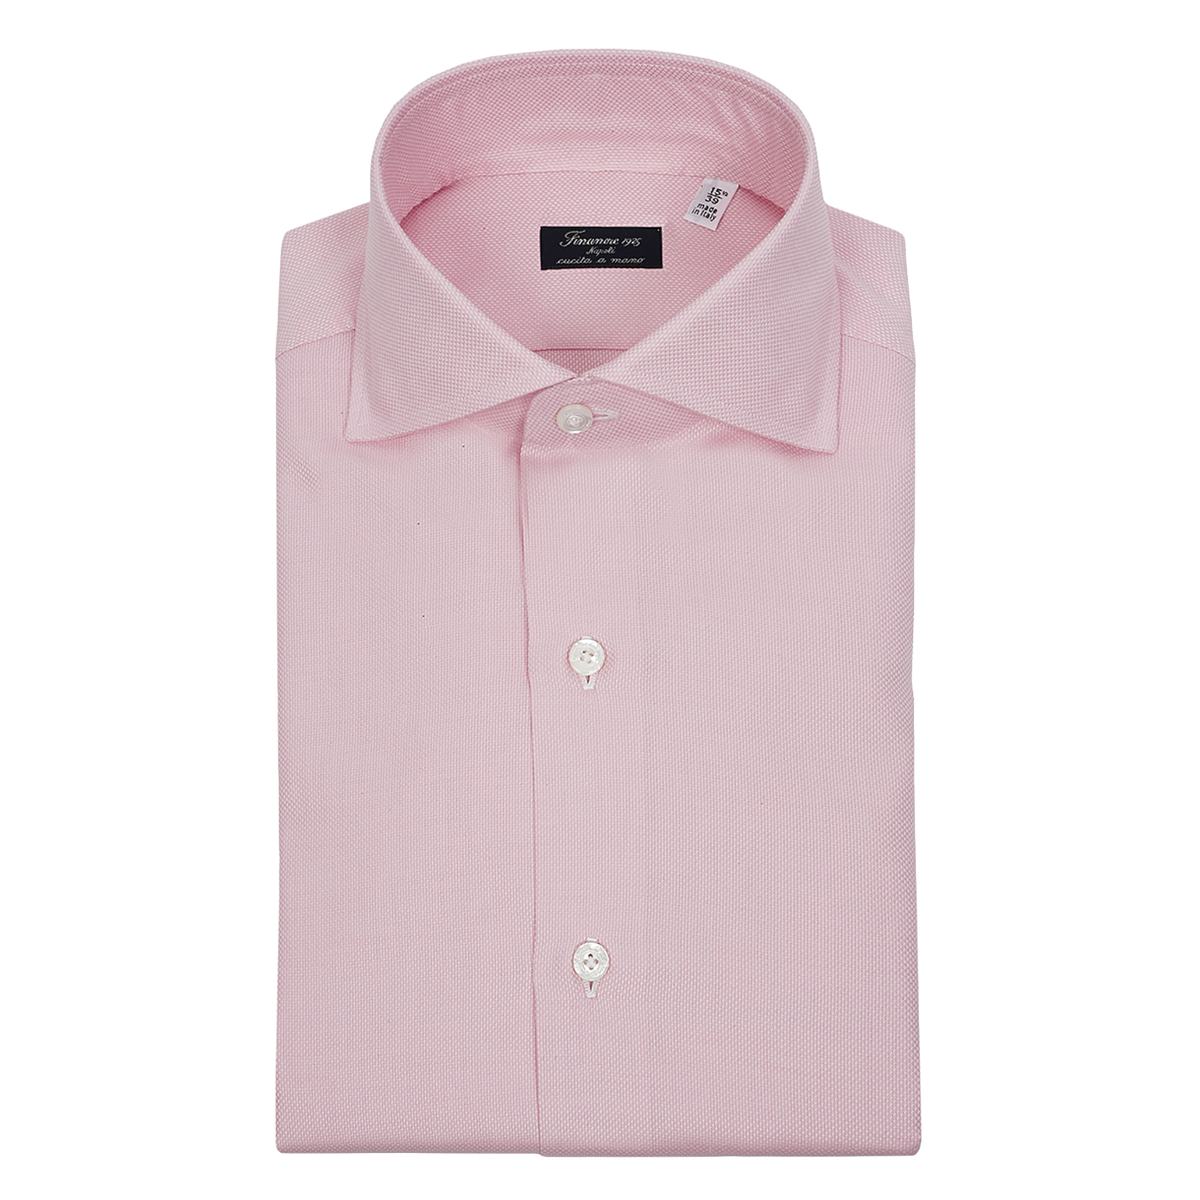 Napoli shirt dress regular pink cotton micropattern Finamore 1925